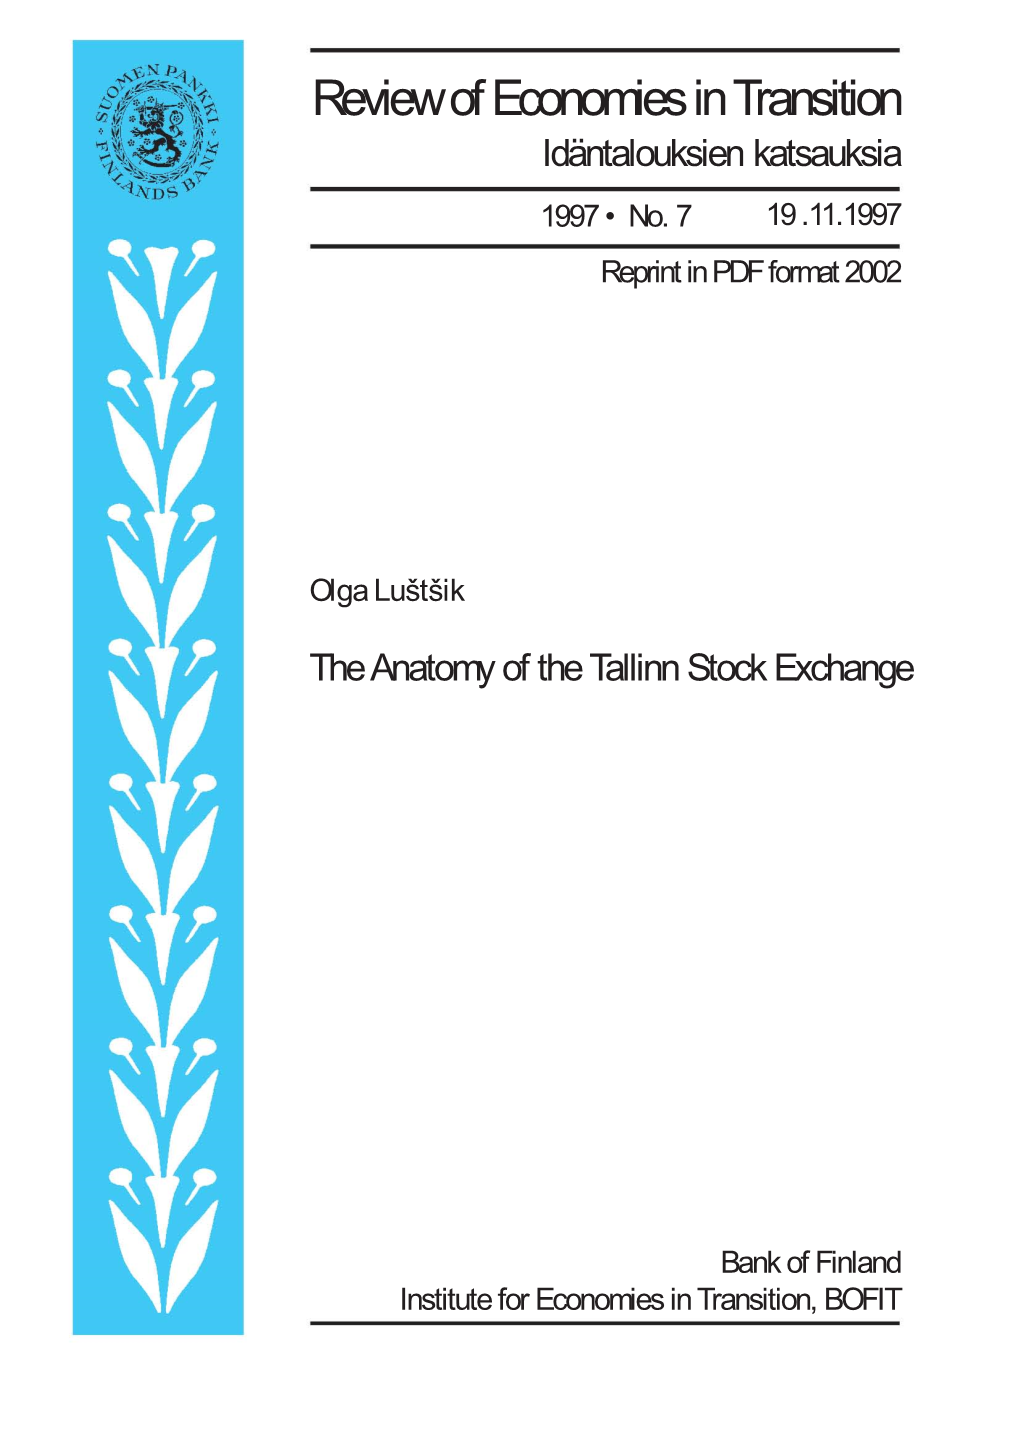 The Anatomy of the Tallinn Stock Exchange